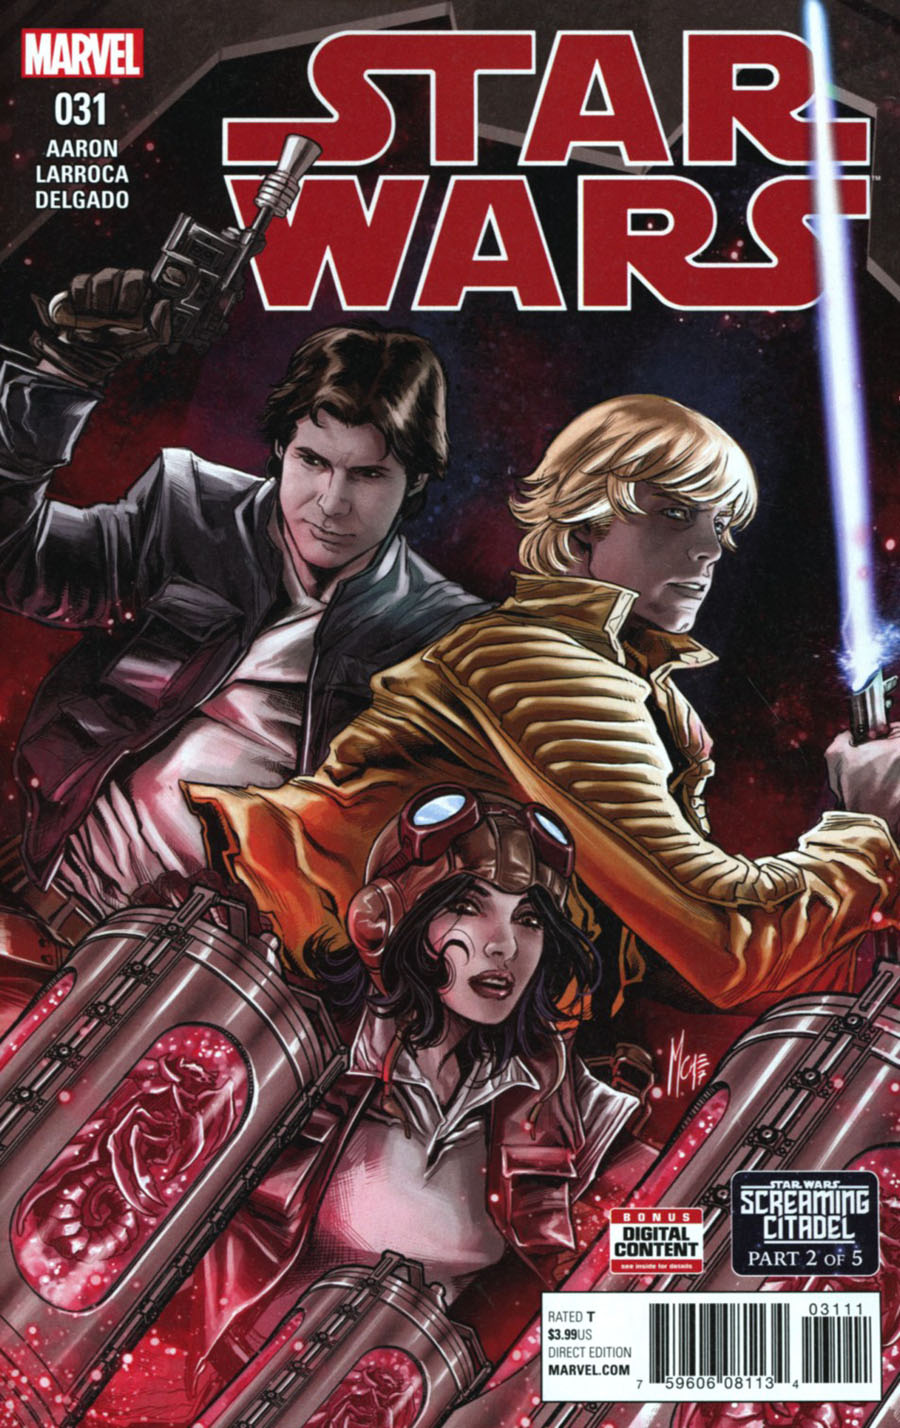 Star Wars Vol 4 #31 Cover A Regular Marco Checchetto Cover (Screaming Citadel Part 2)